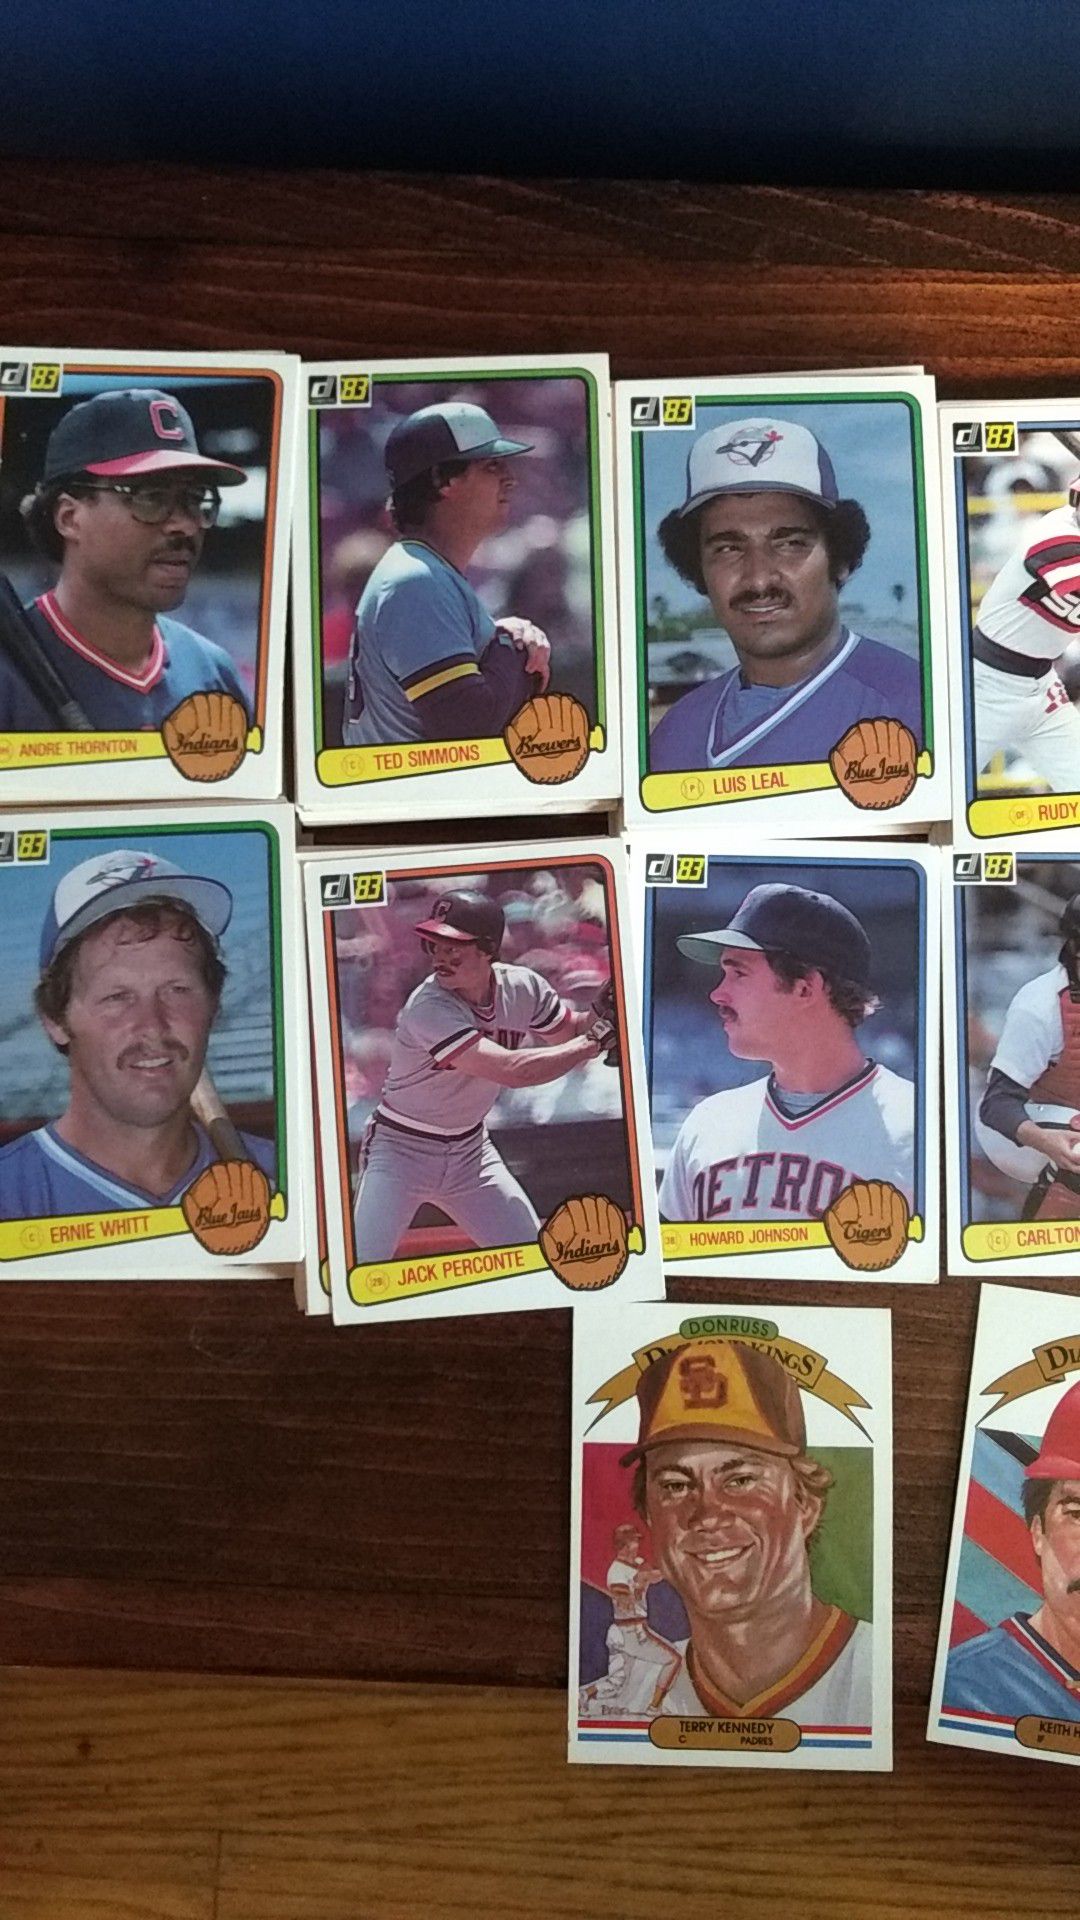 1983 Donruss baseball cards around 250 total